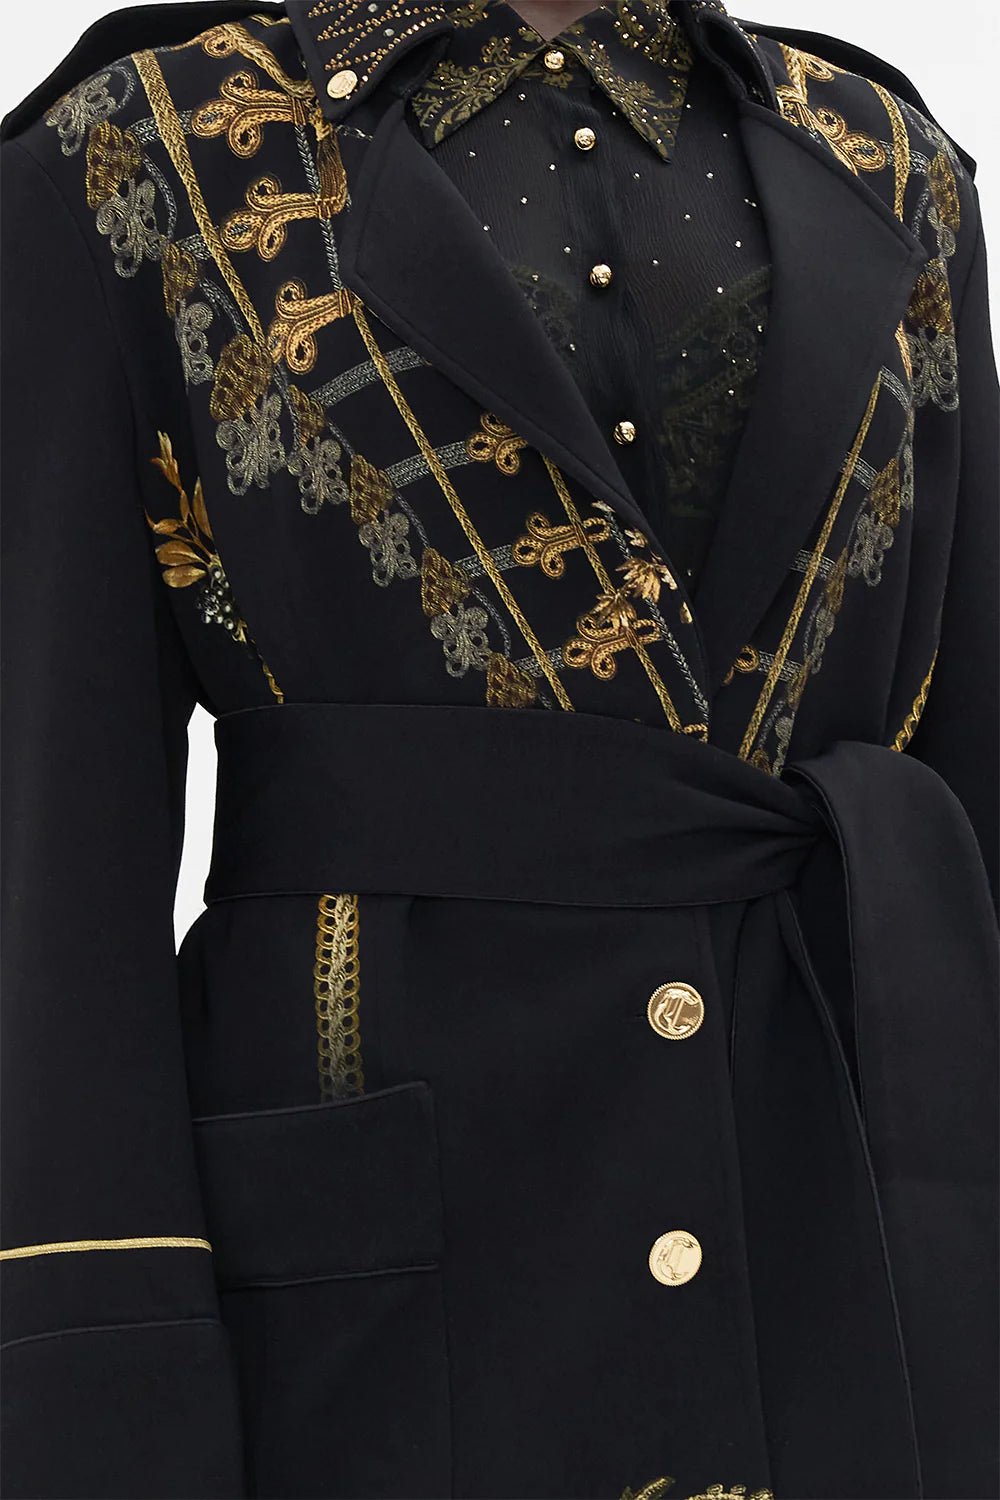 CAMILLA - Long Military Coat The Night Is Noir - Camilla - Pinkhill - darwin fashion - darwin boutique